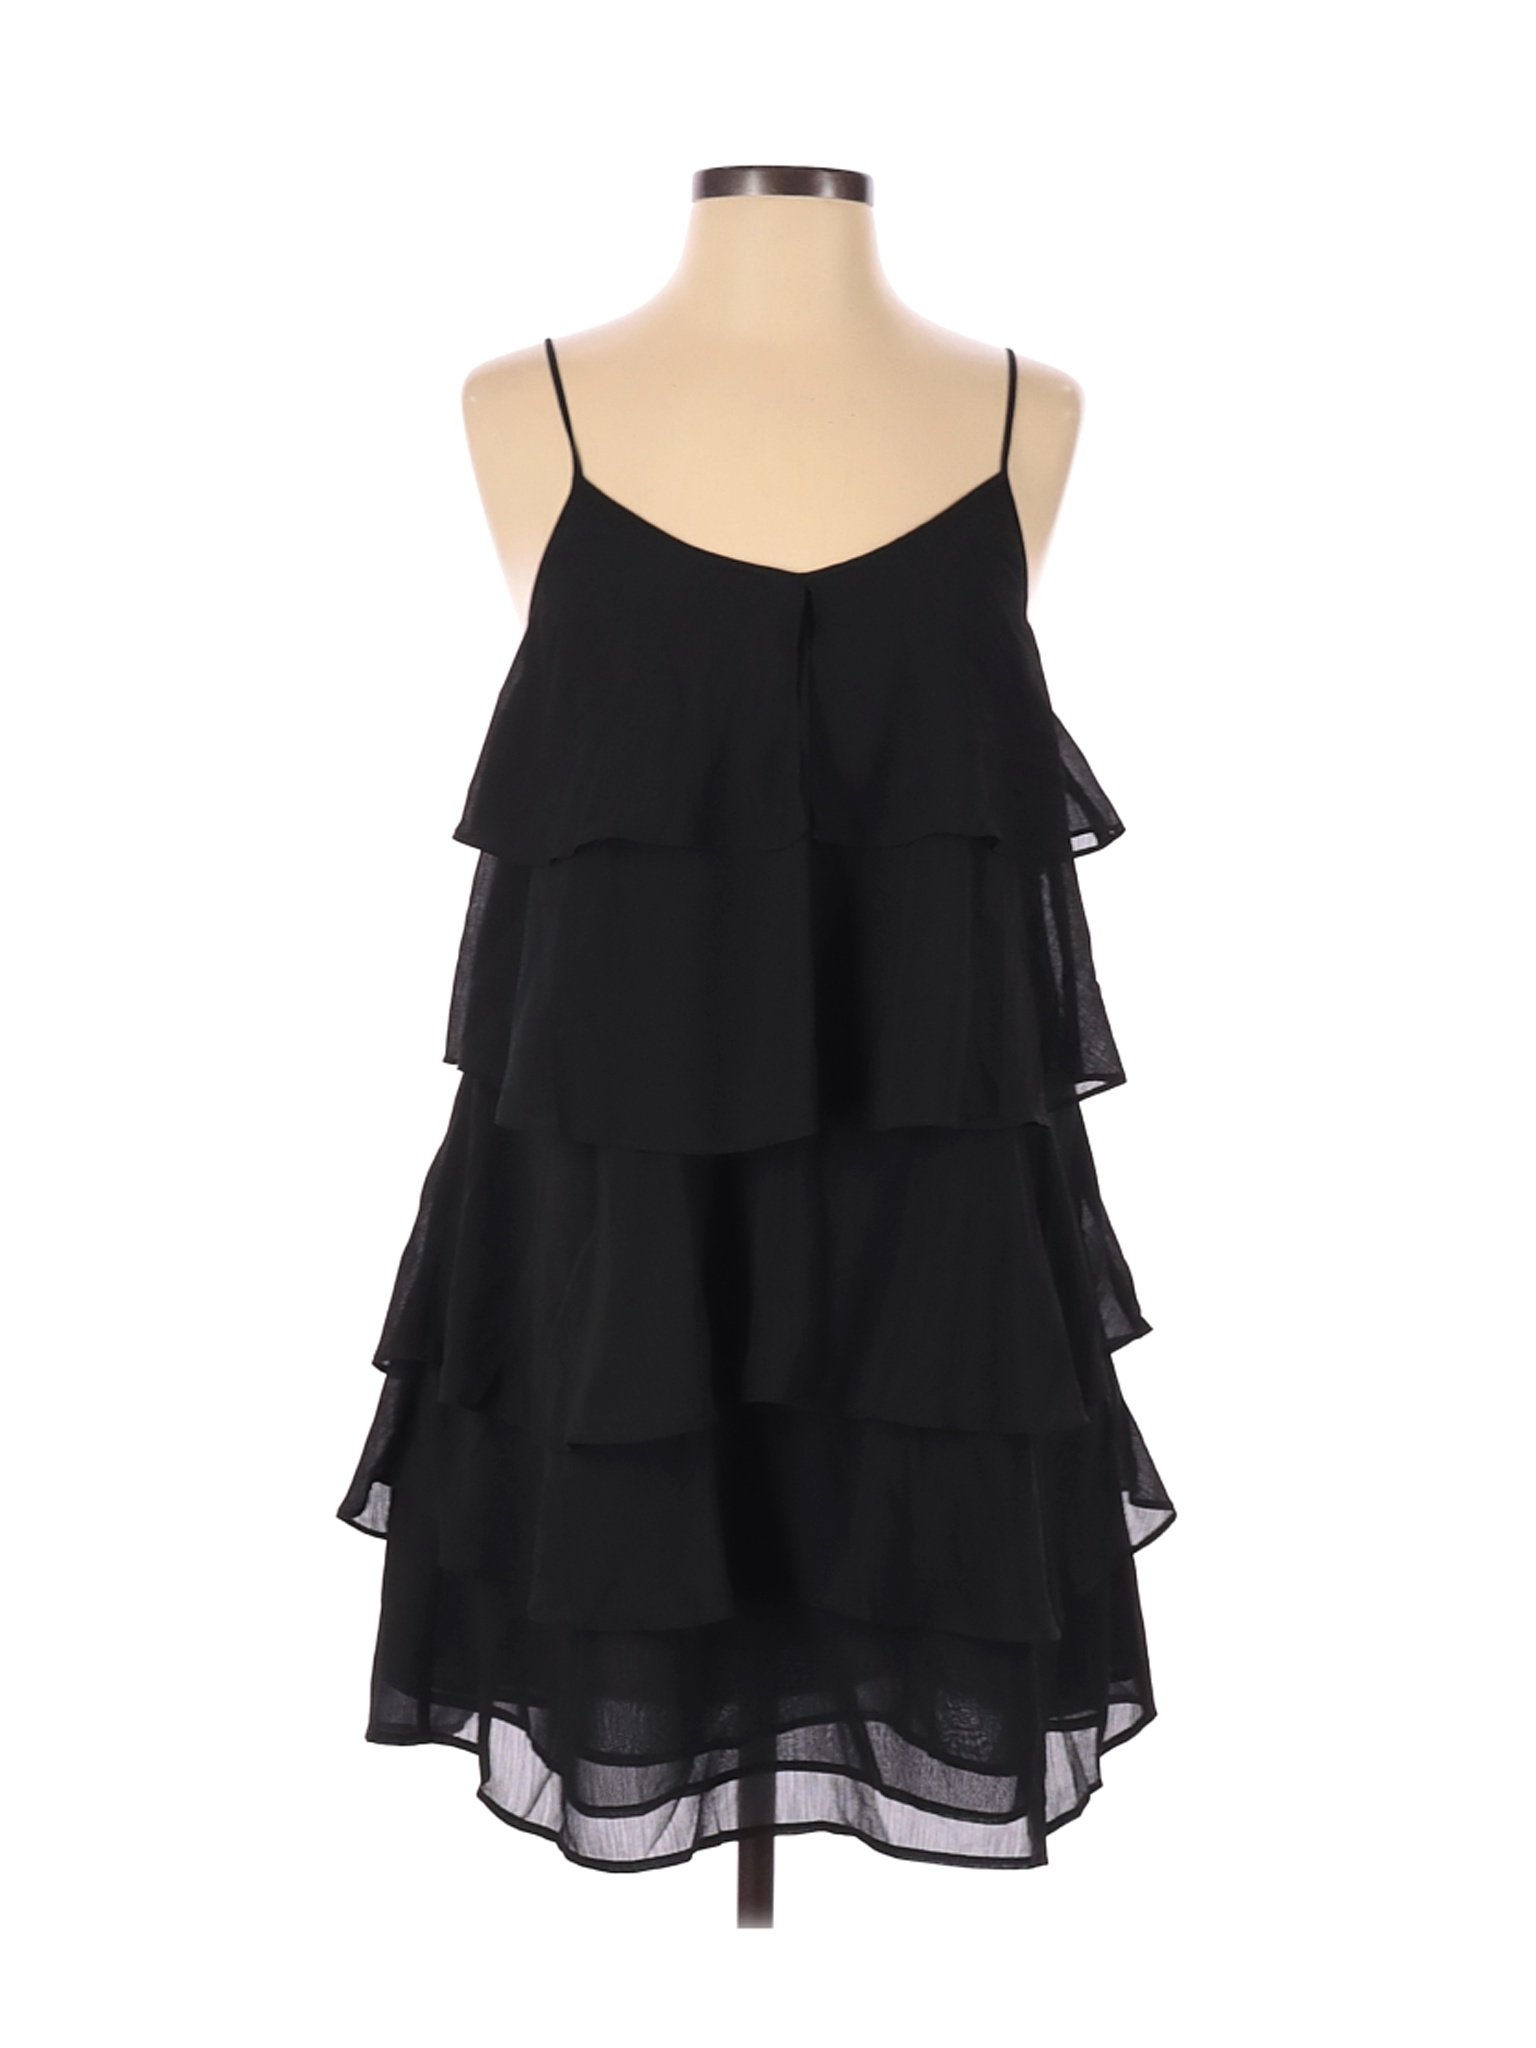 NWT Madewell Women Black Cocktail Dress XS | eBay